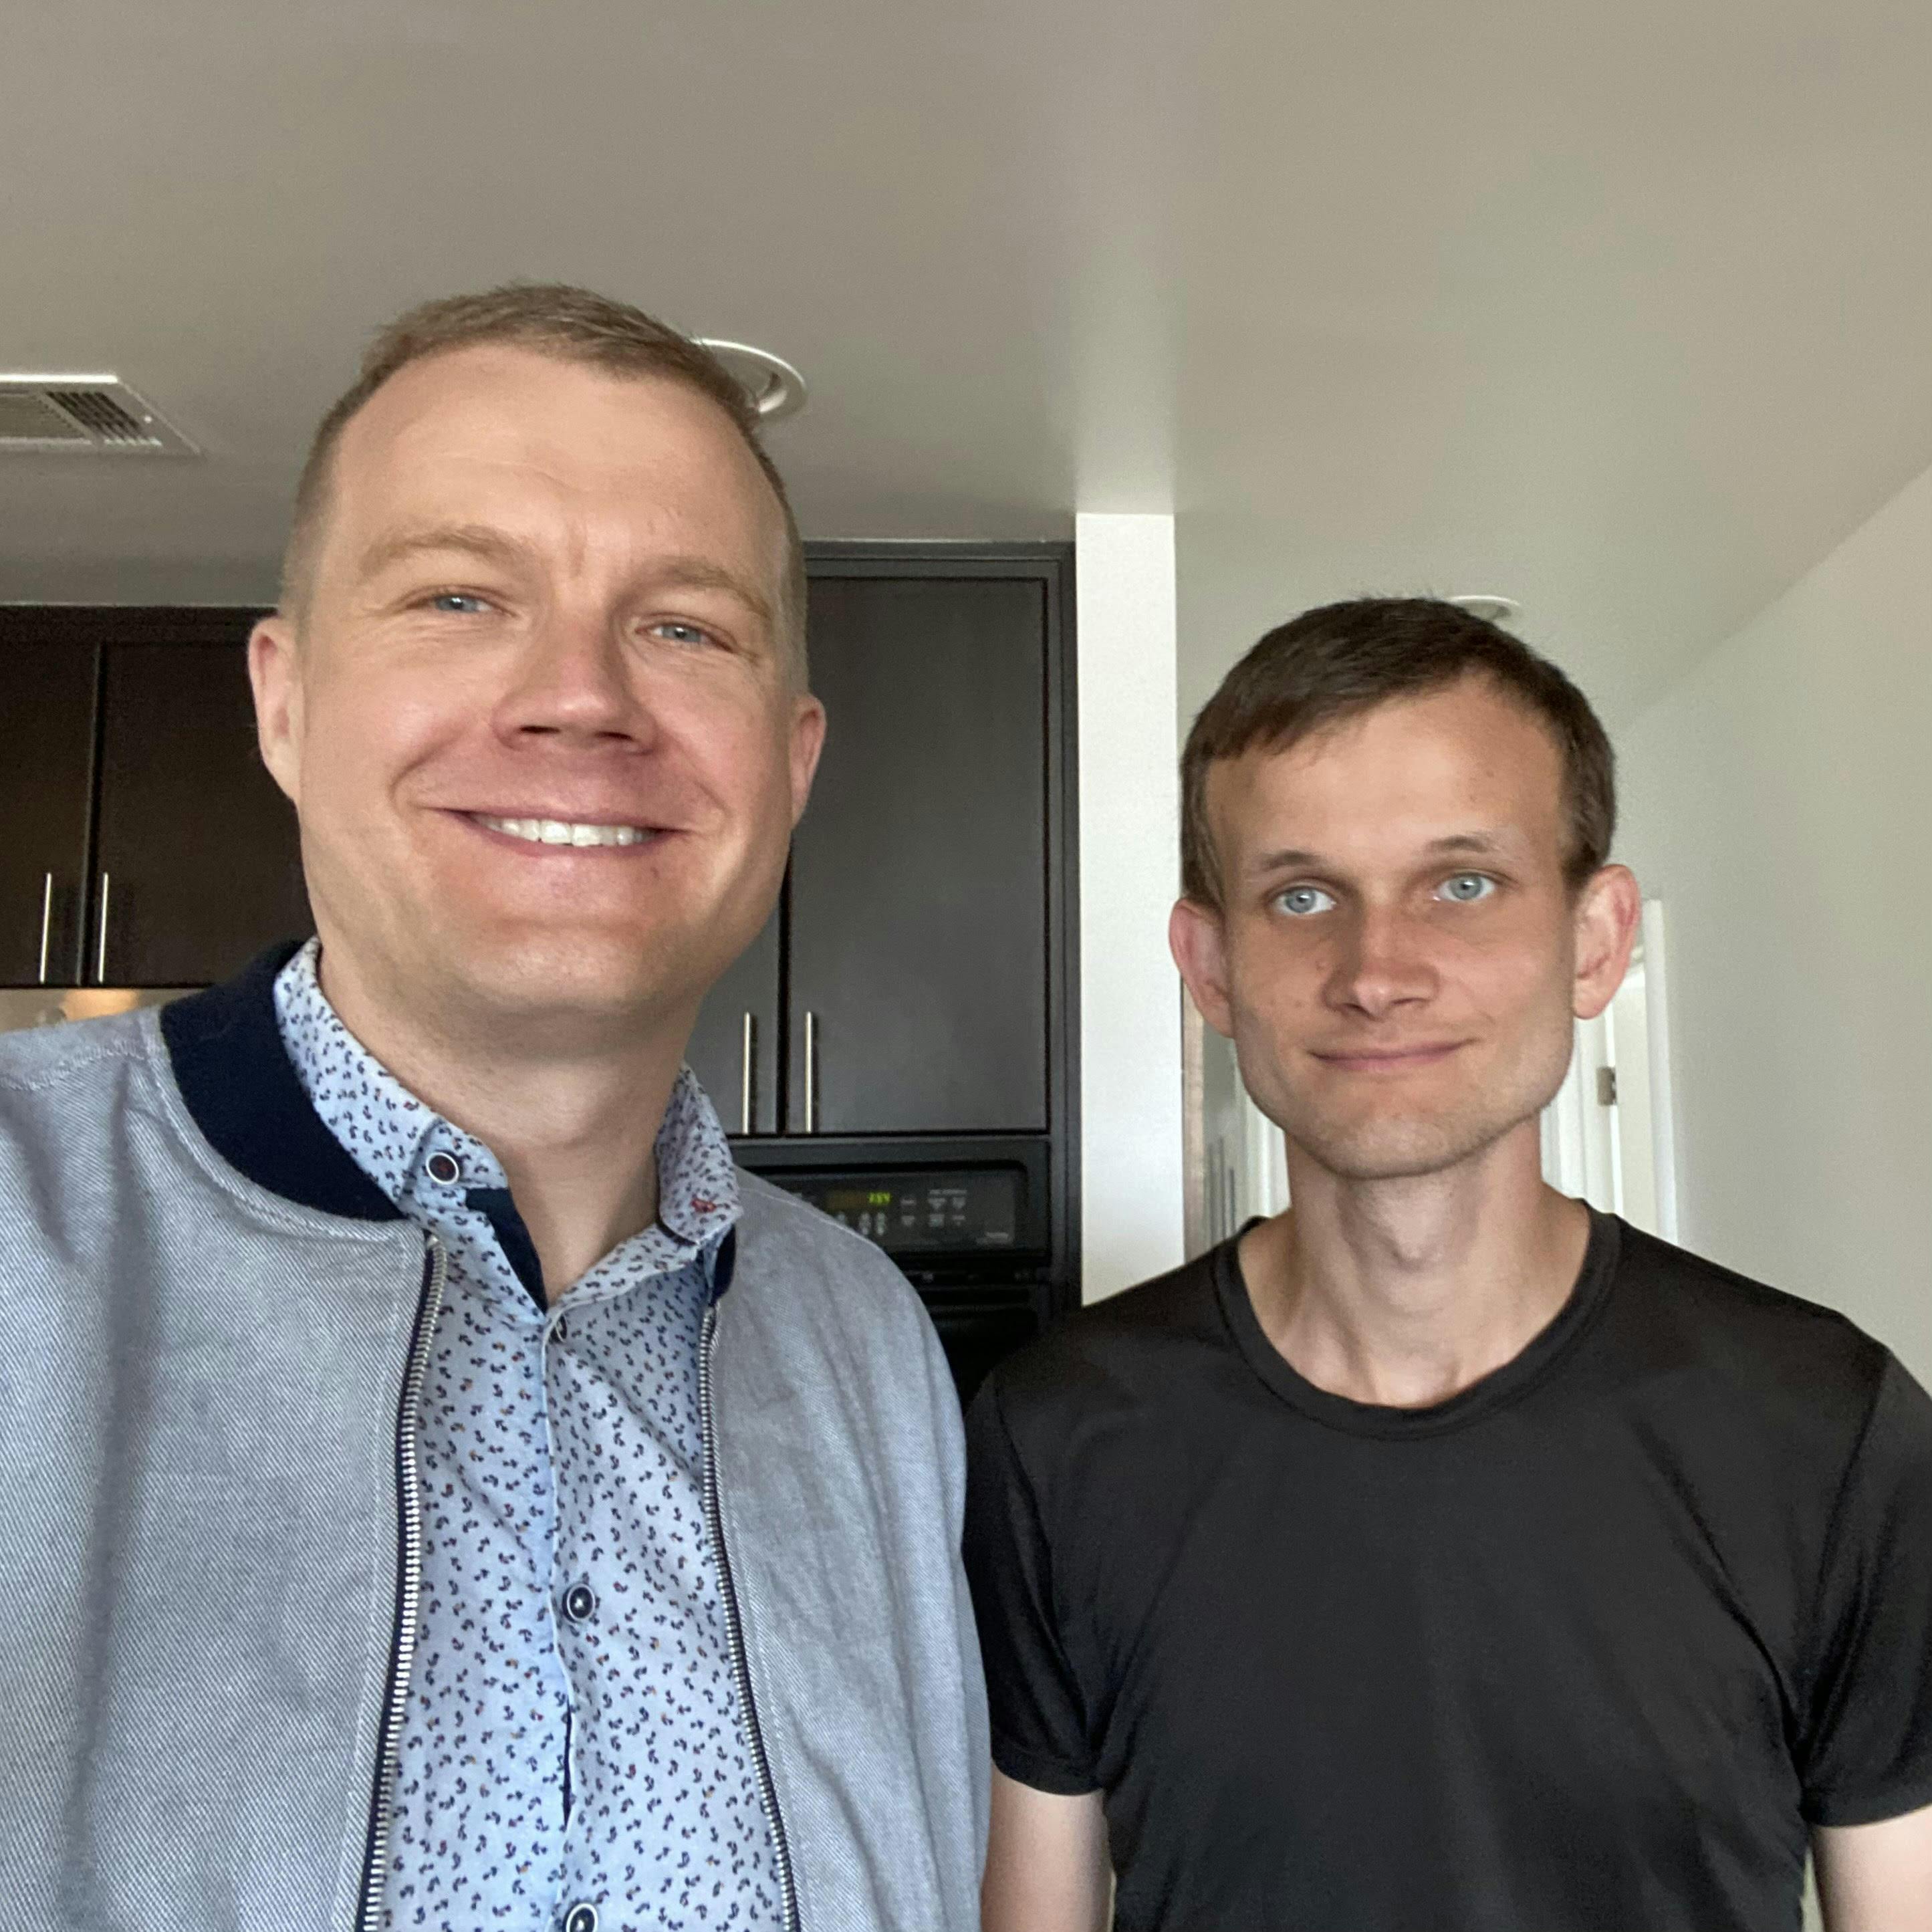 Me and Vitalik Butern, founder of Ethereum